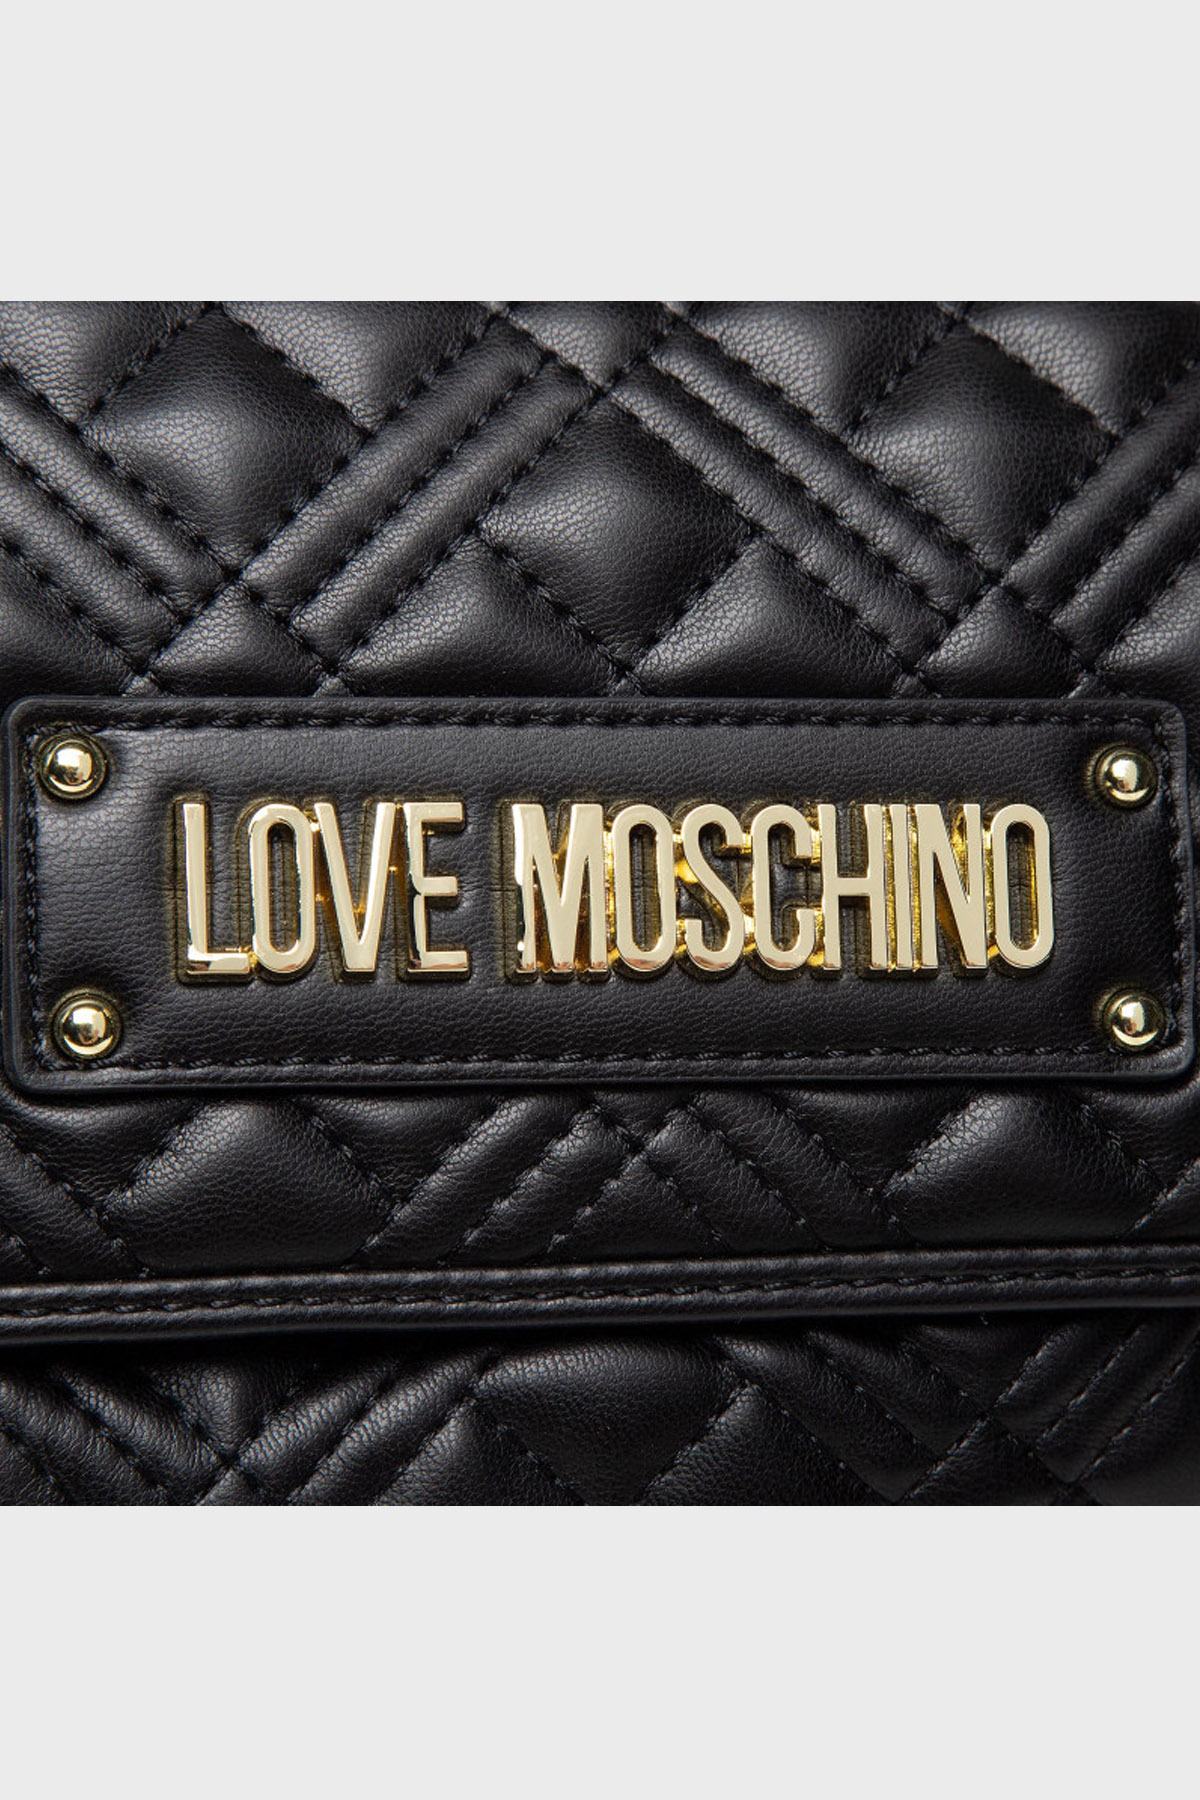 Love Moschino Marka Logolu Ayarlanabilir Askılı Bayan Çanta JC4133PP1DLA0000 SİYAH